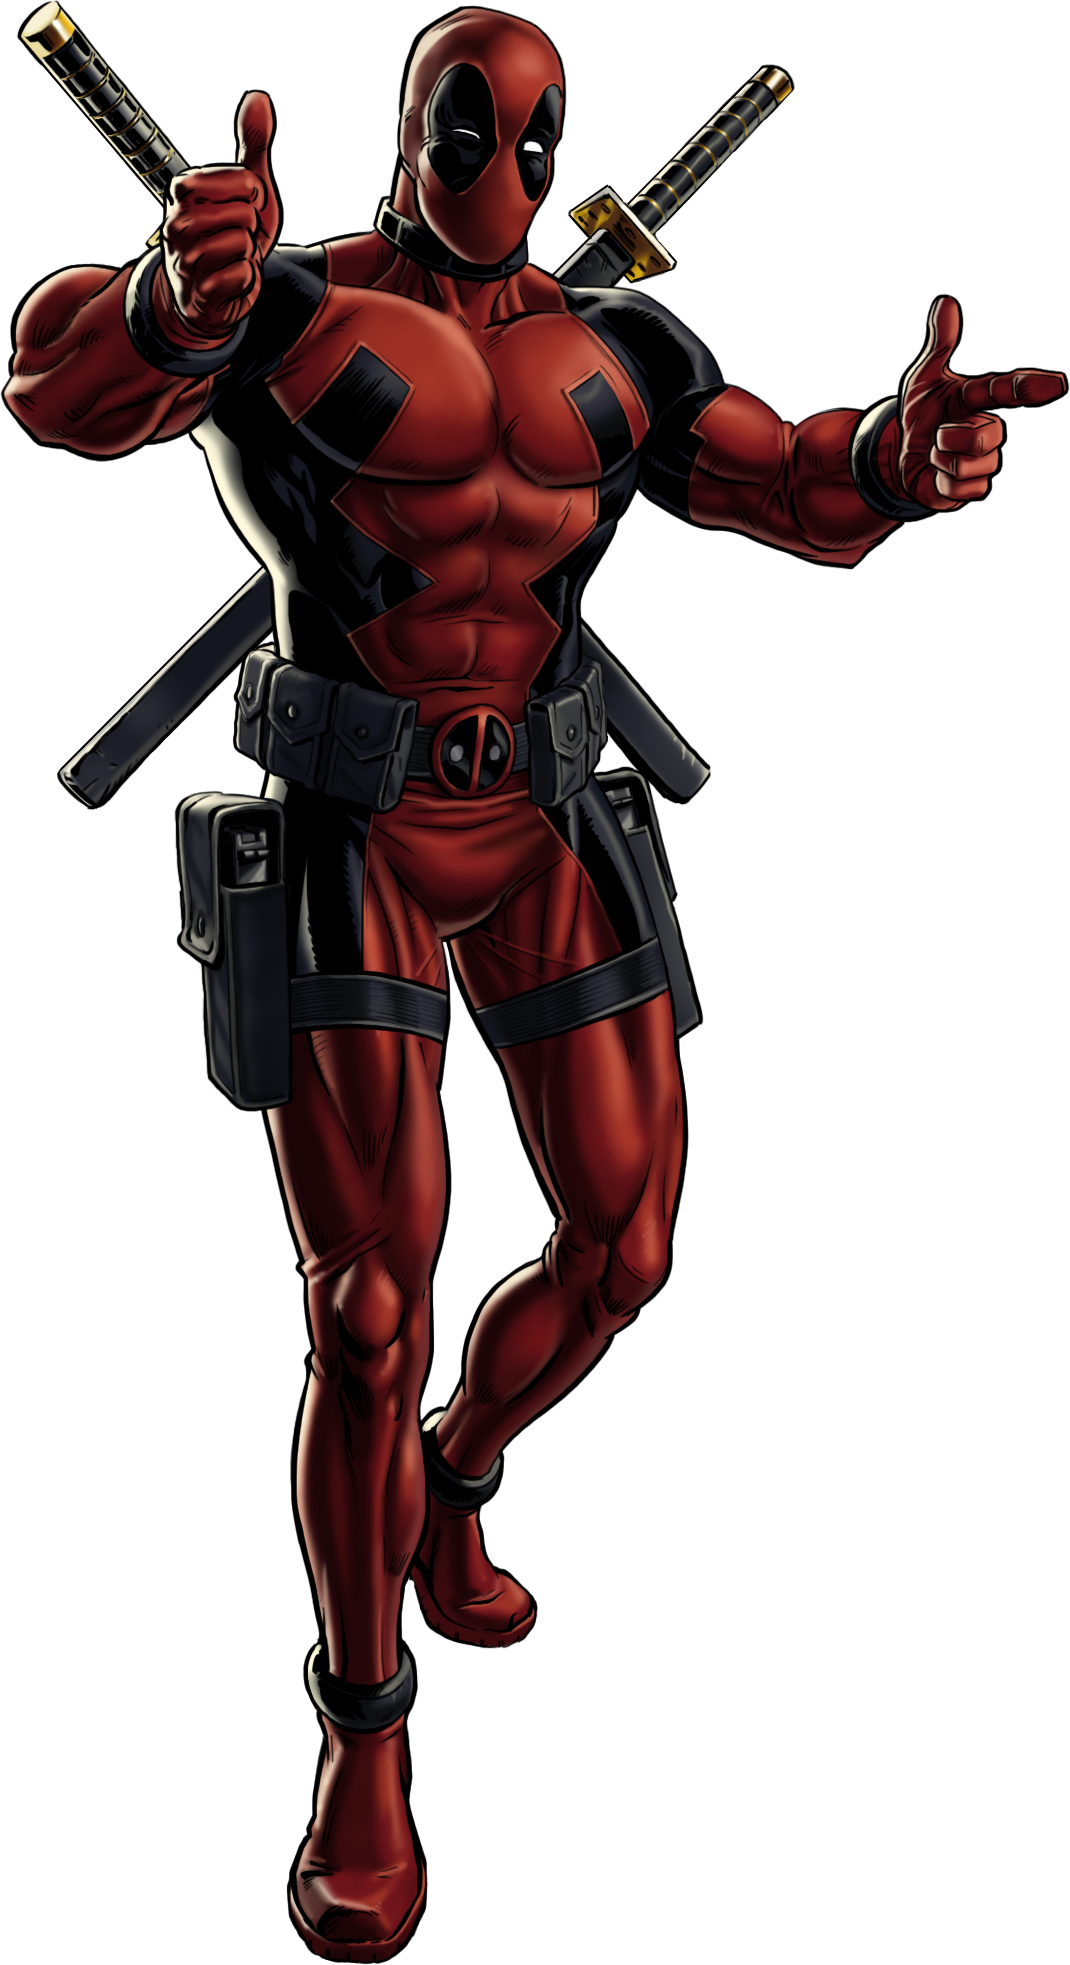 Deadpool: Does He Feel Pain & Can He Die?